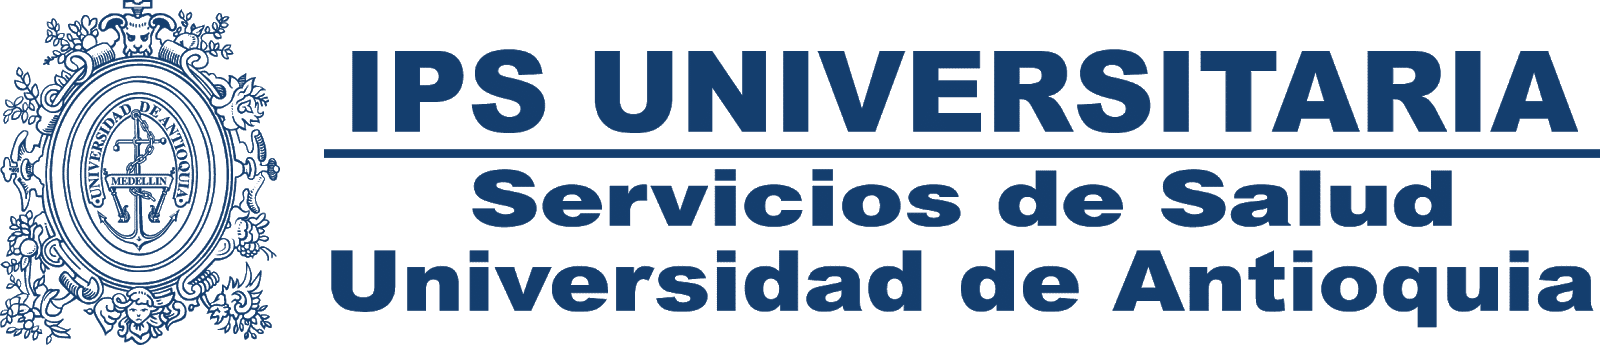 Logo-IPS-Universitaria-1